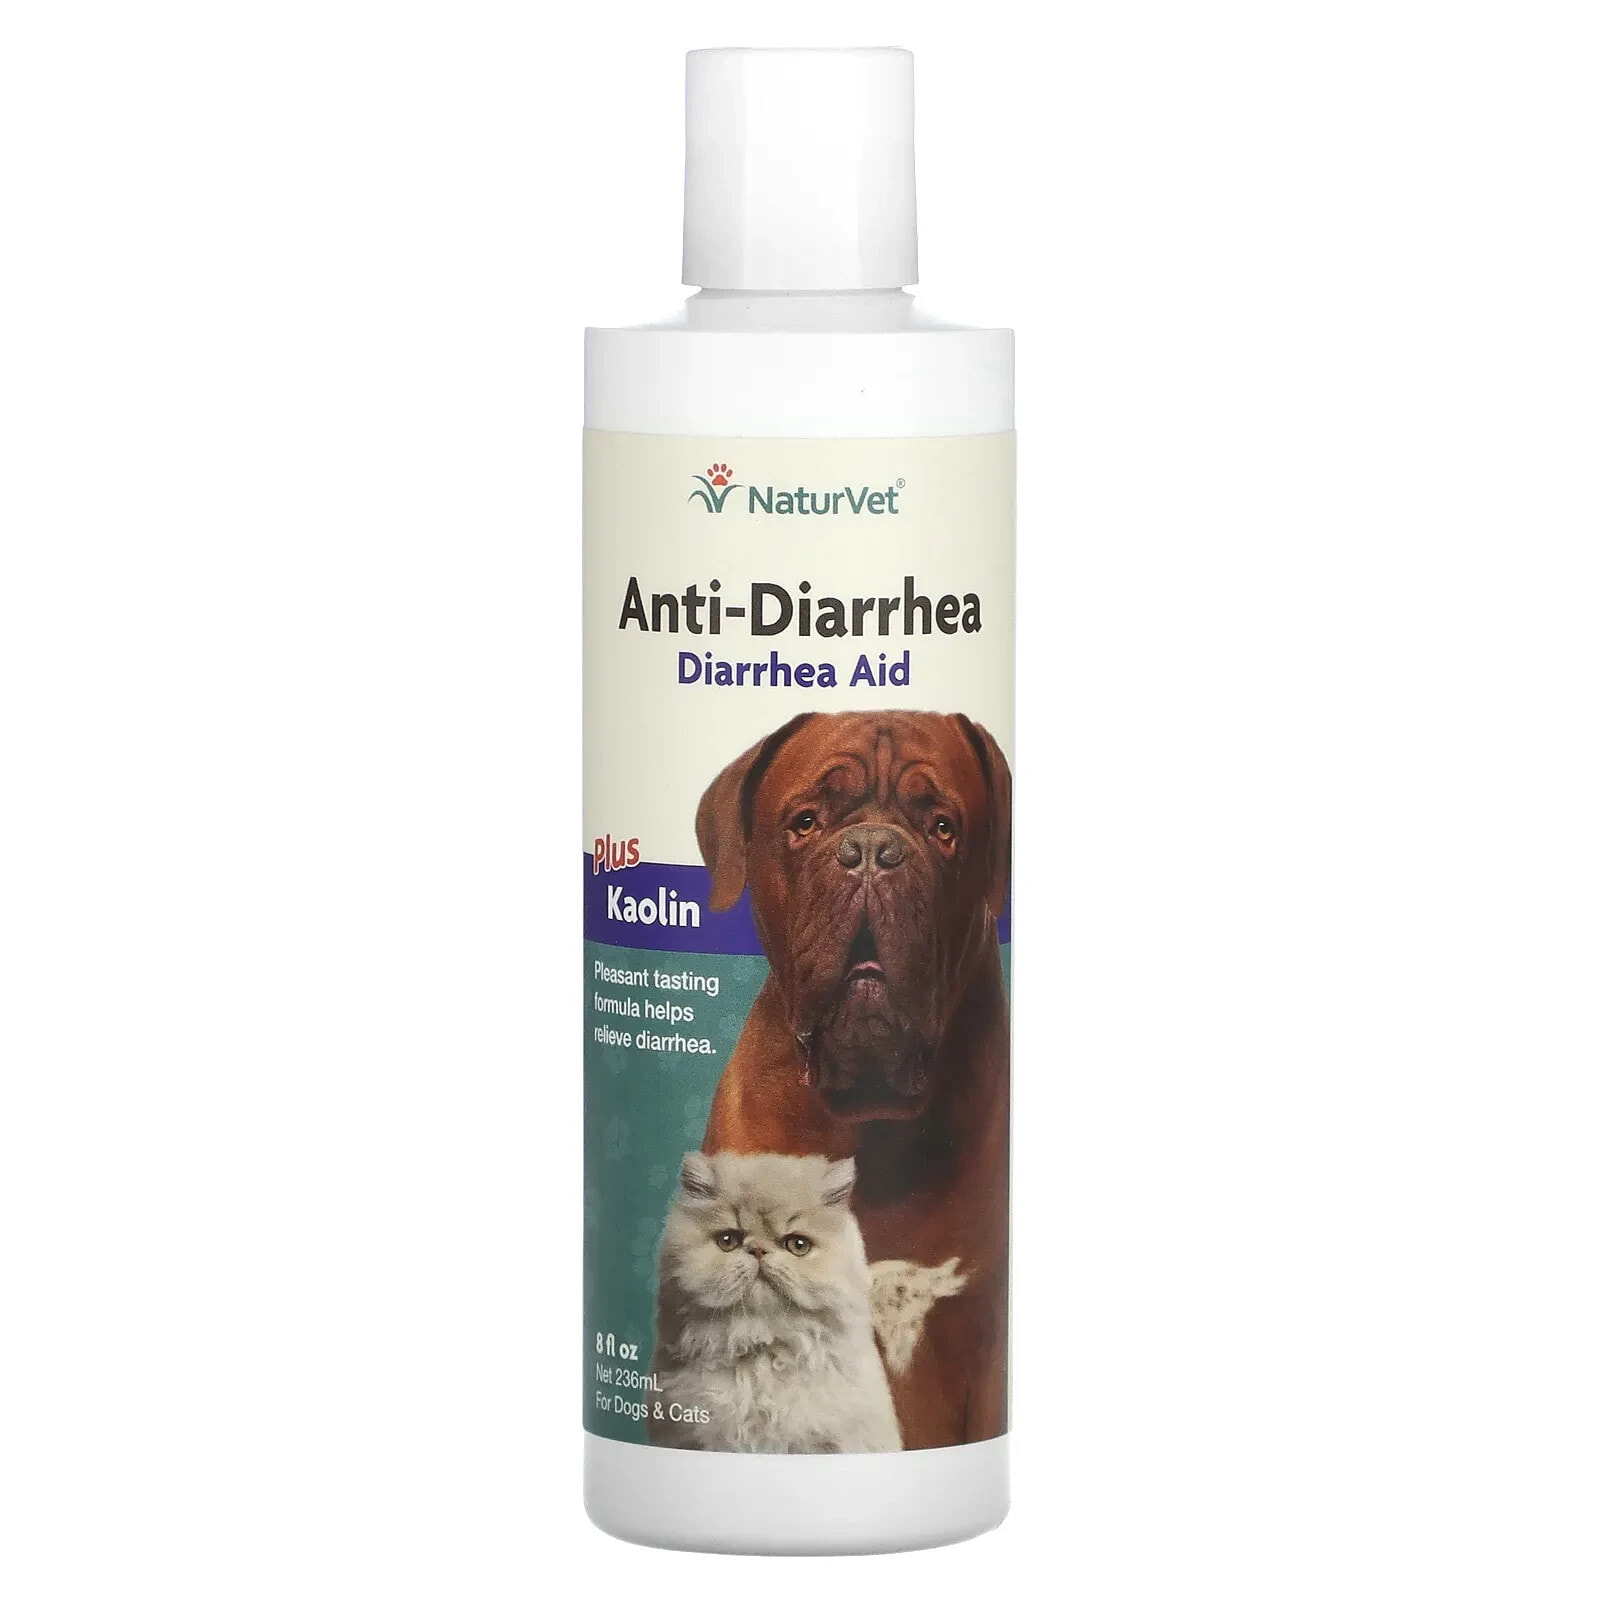 NaturVet, Anti-Diarrhea, Diarrhea Aid Plus Kaolin, For Dogs & Cats, 8 fl oz (236 ml)